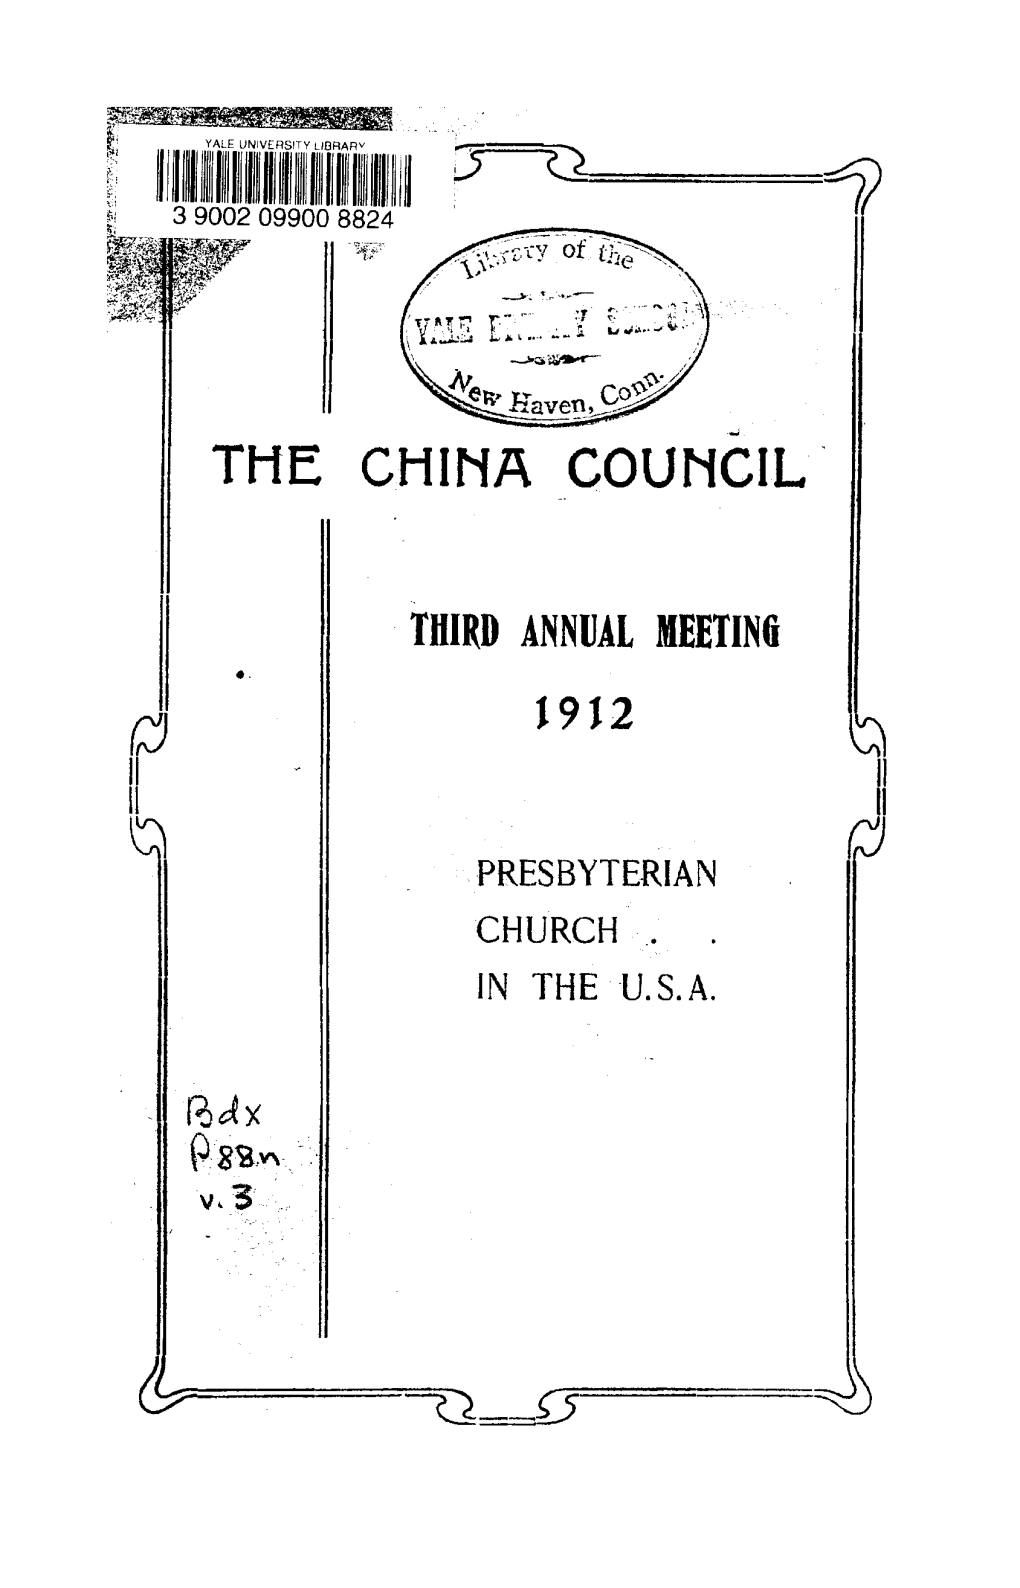 The Chima Council Third Annual Meeting